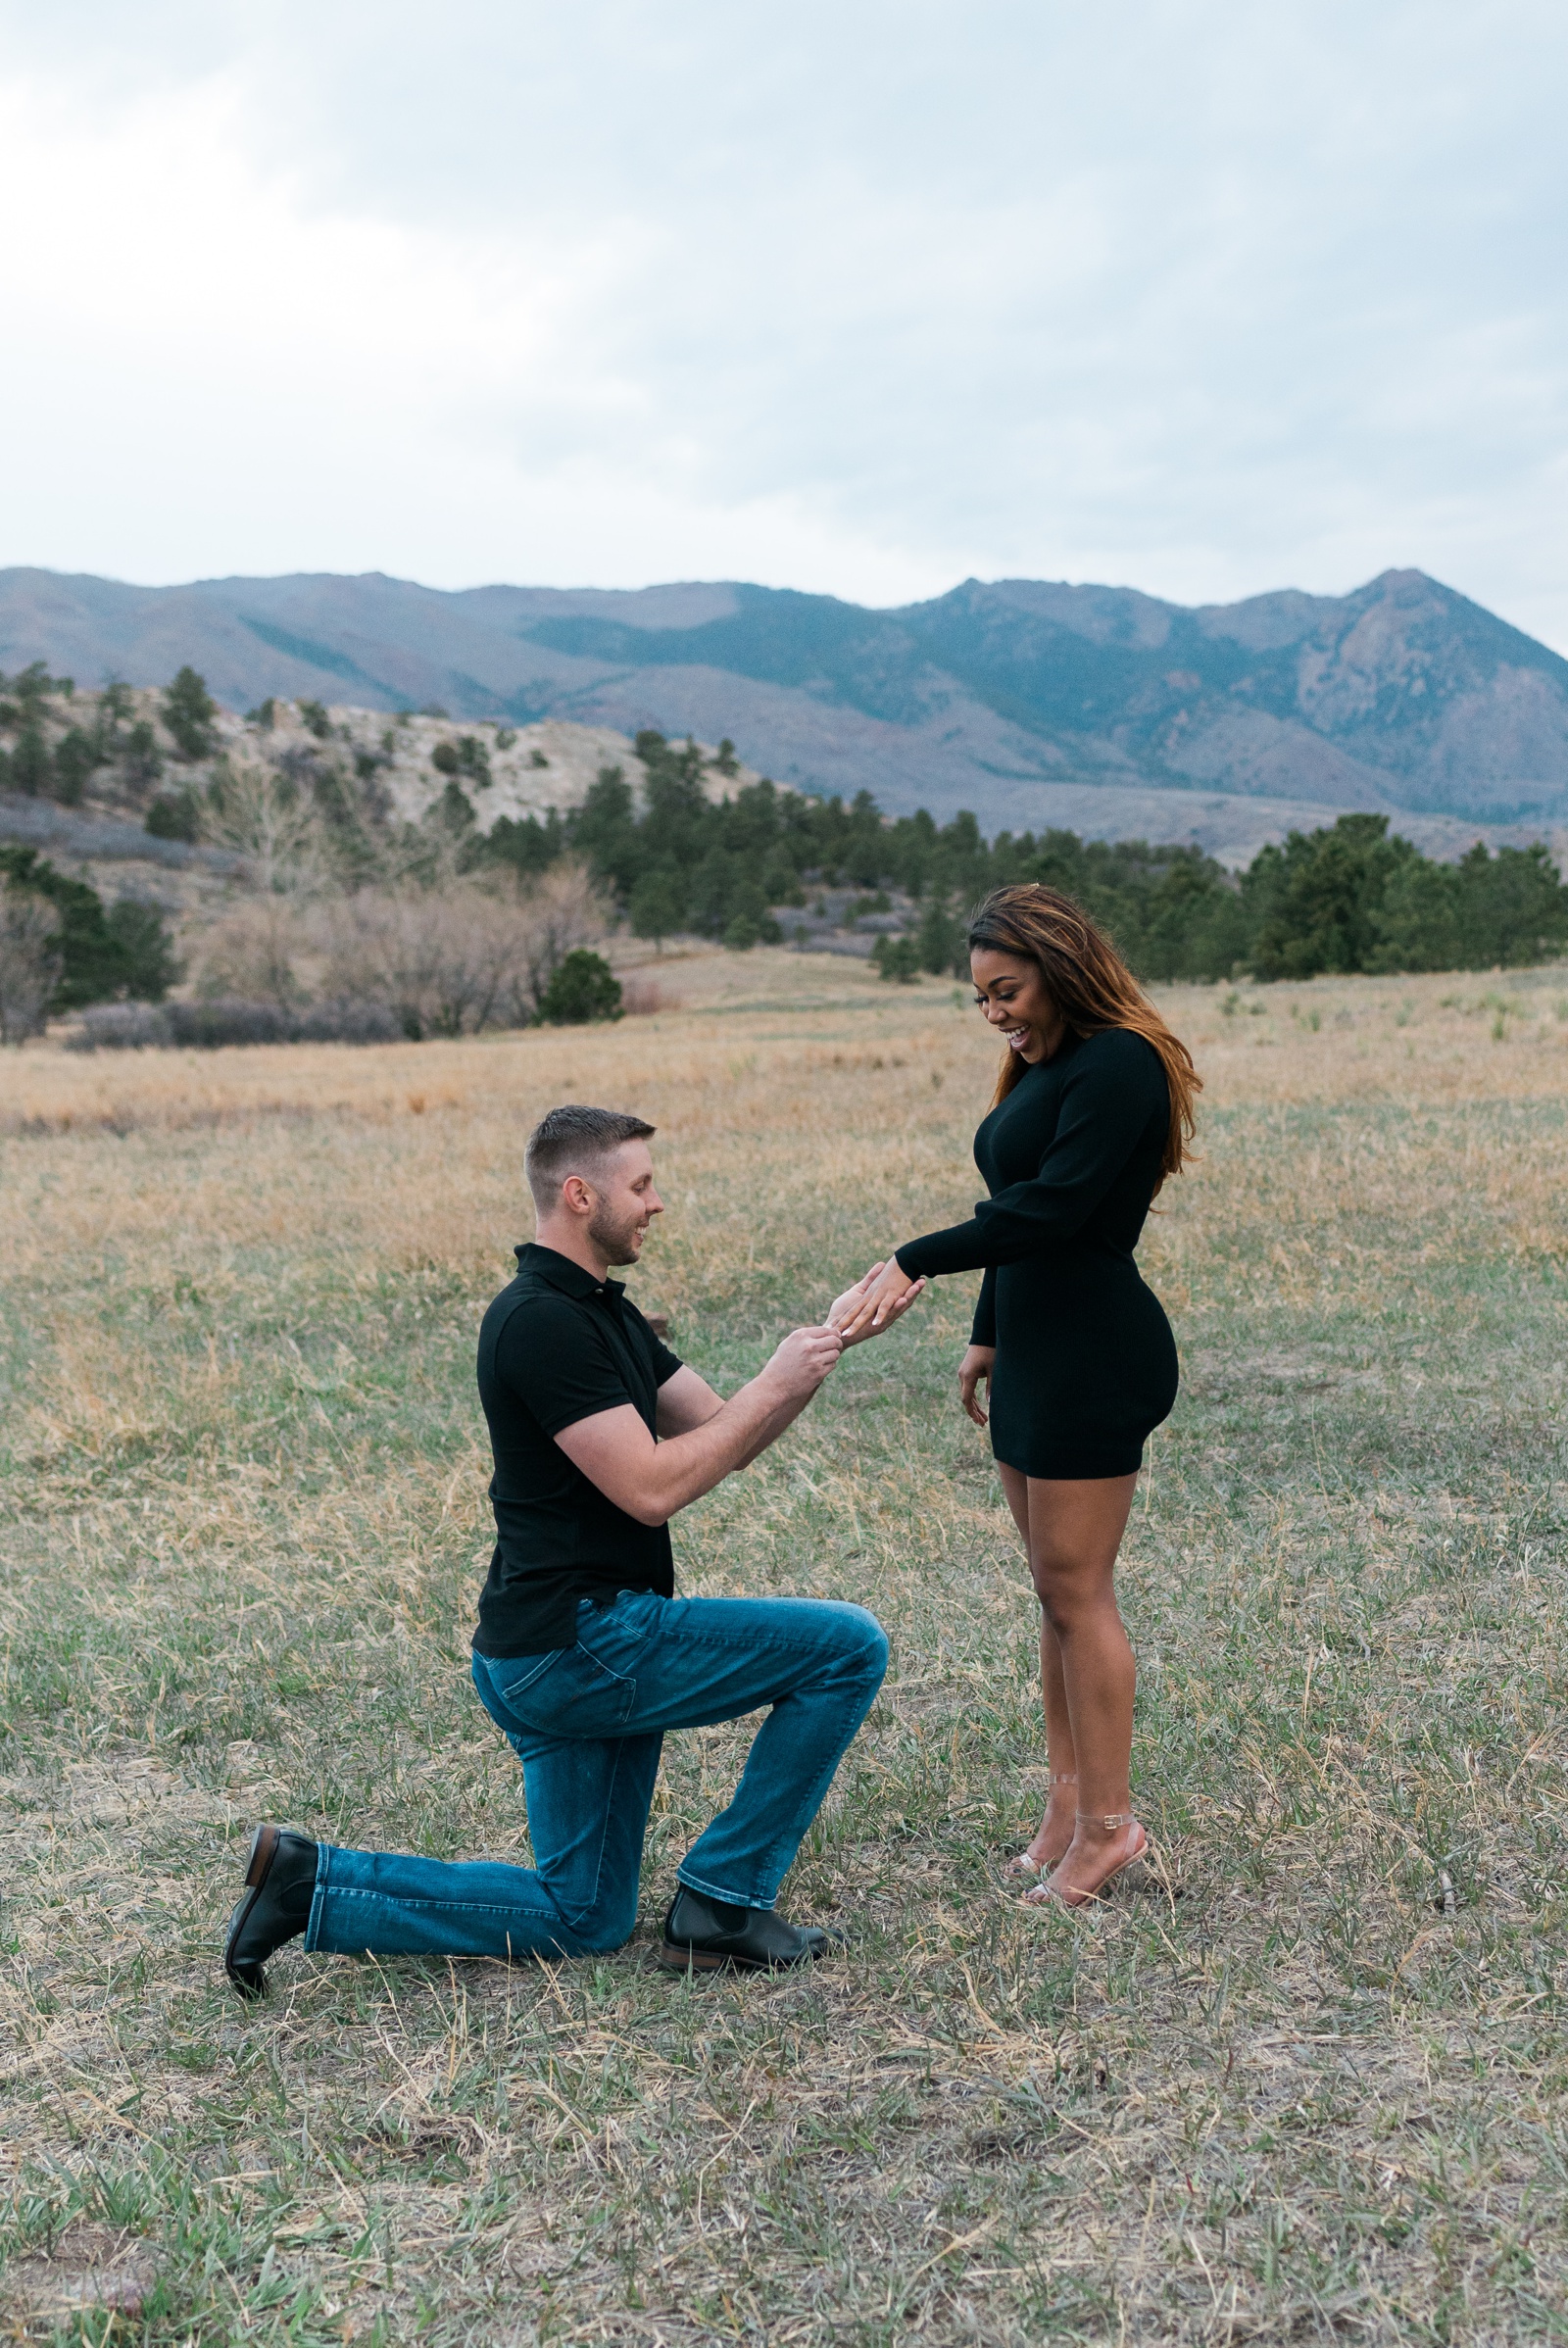 Guy proposing to girlfriend